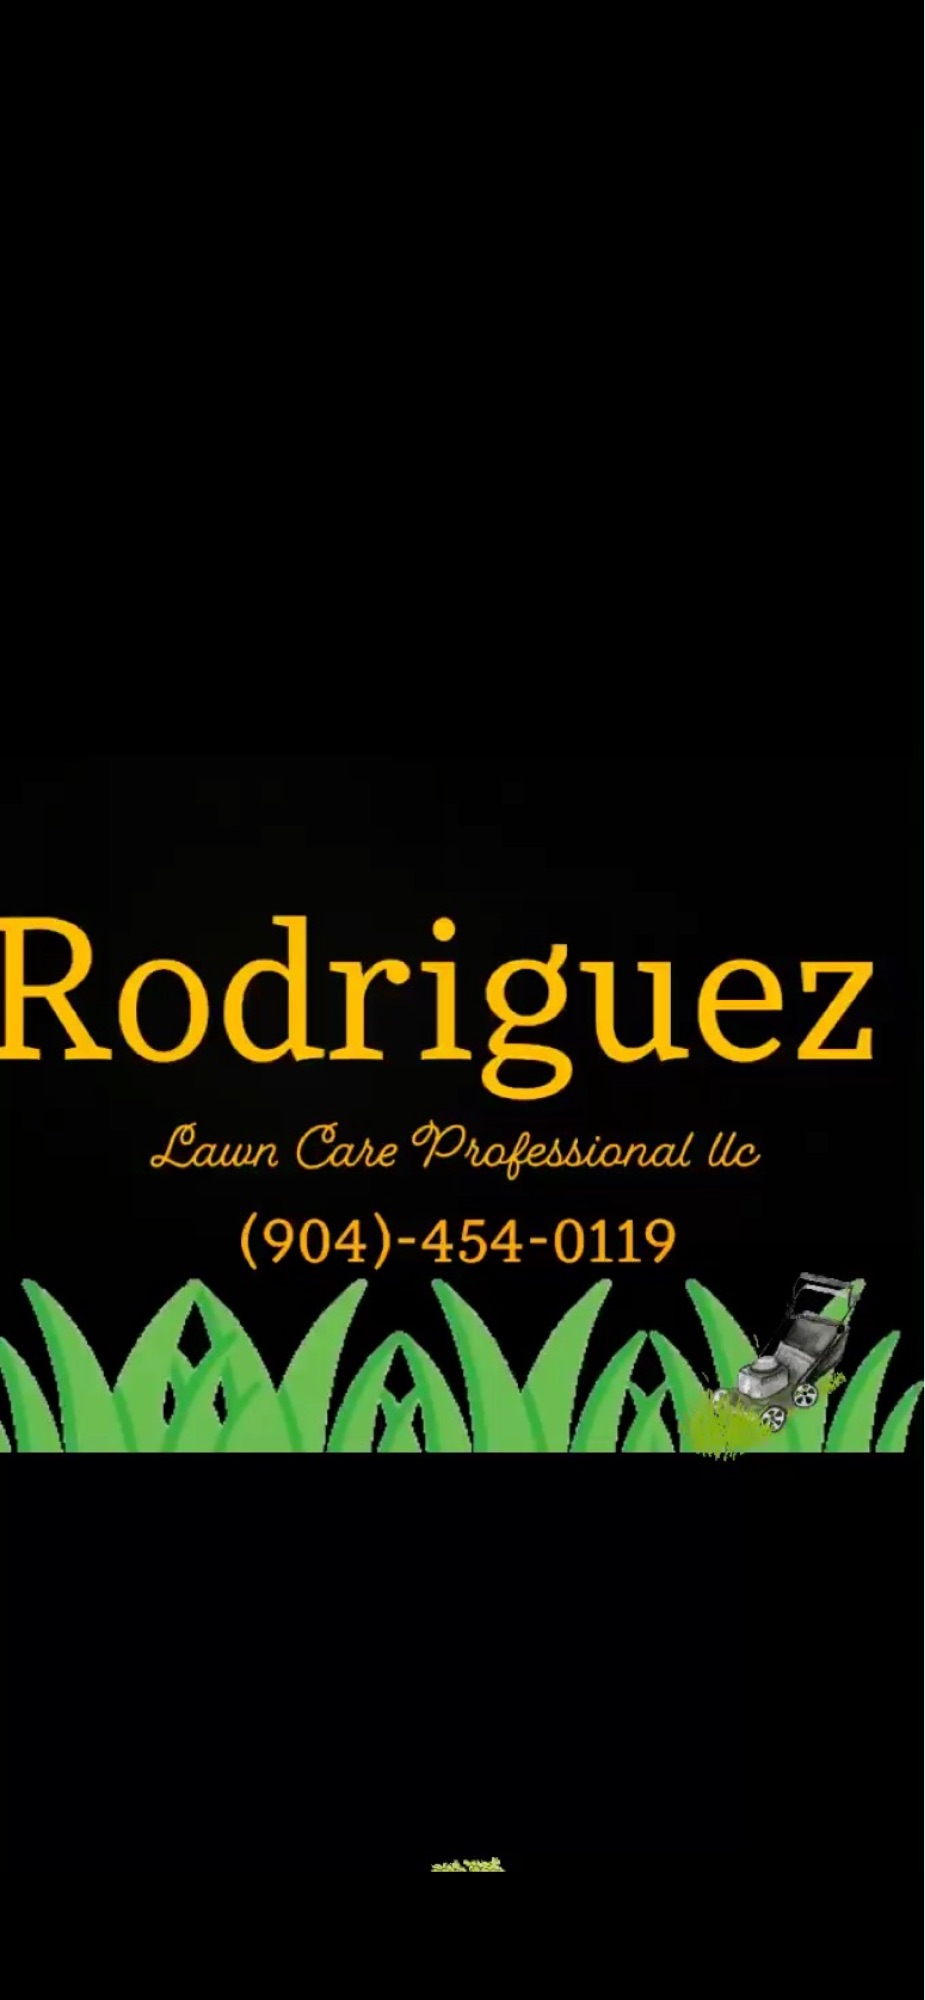 Rodriguez Lawn Care Professional Logo